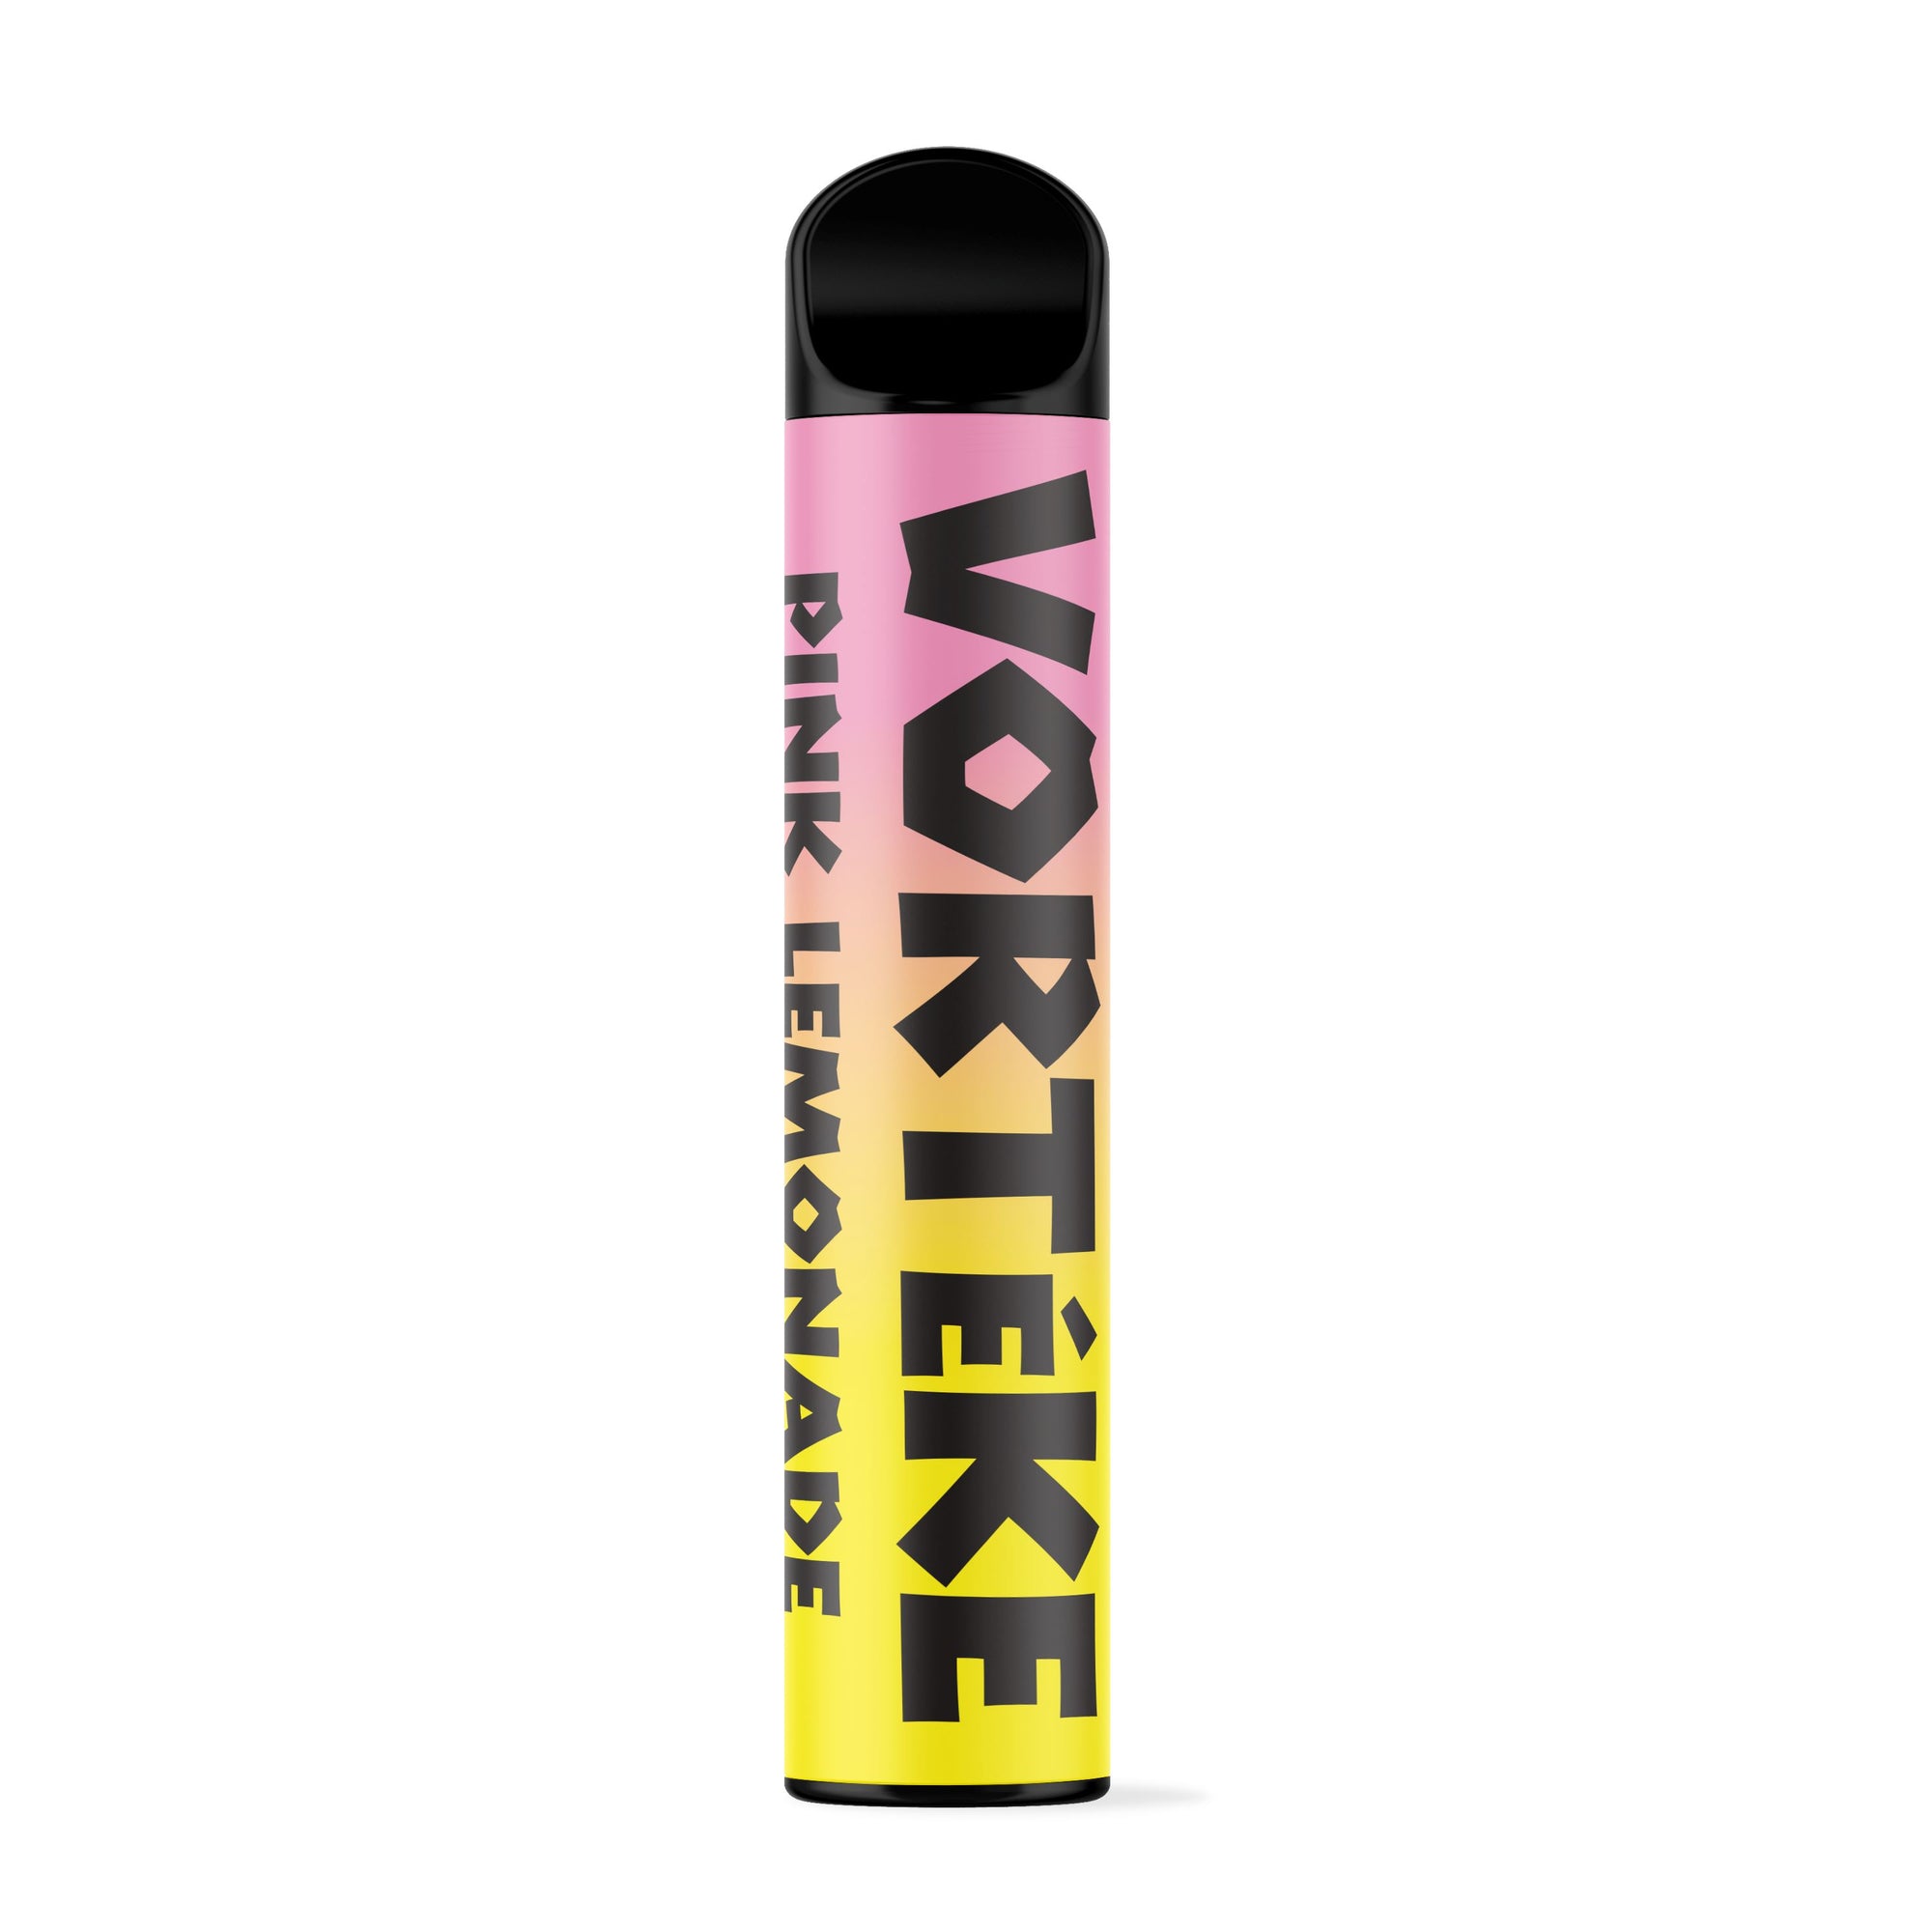 Vorteke Vape Pen - Pink Lemonade - Vapoureyes